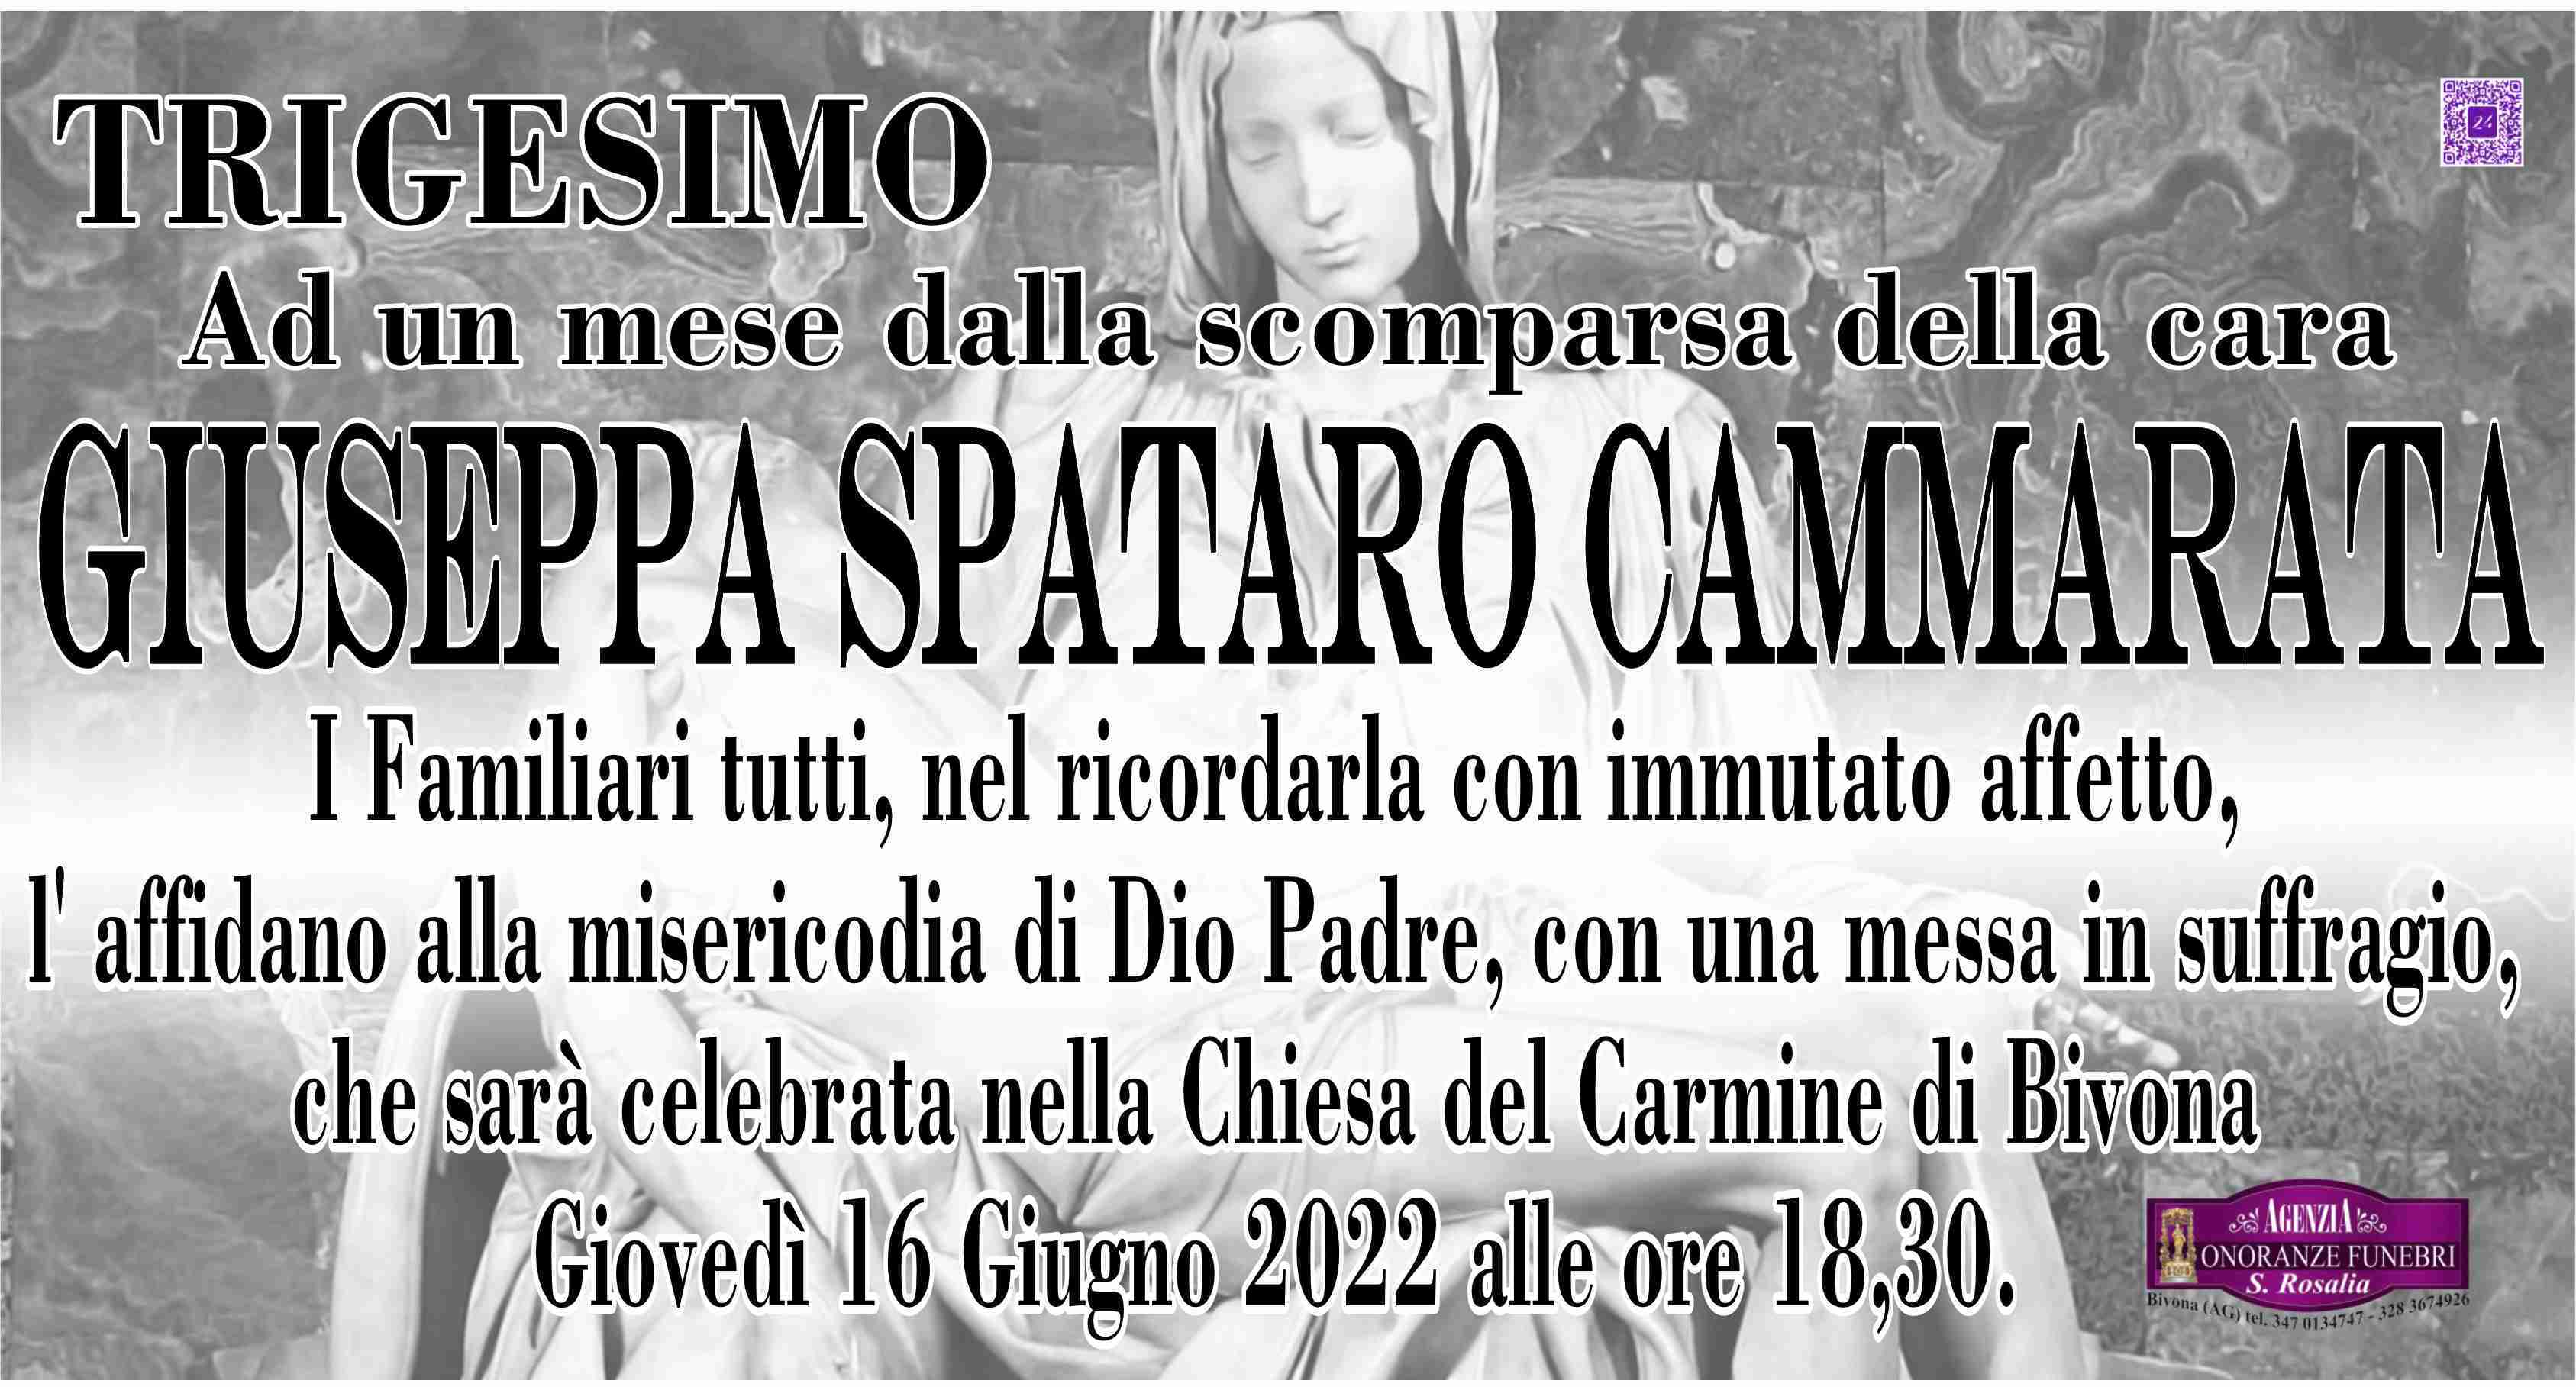 Giuseppa Spataro Cammarata